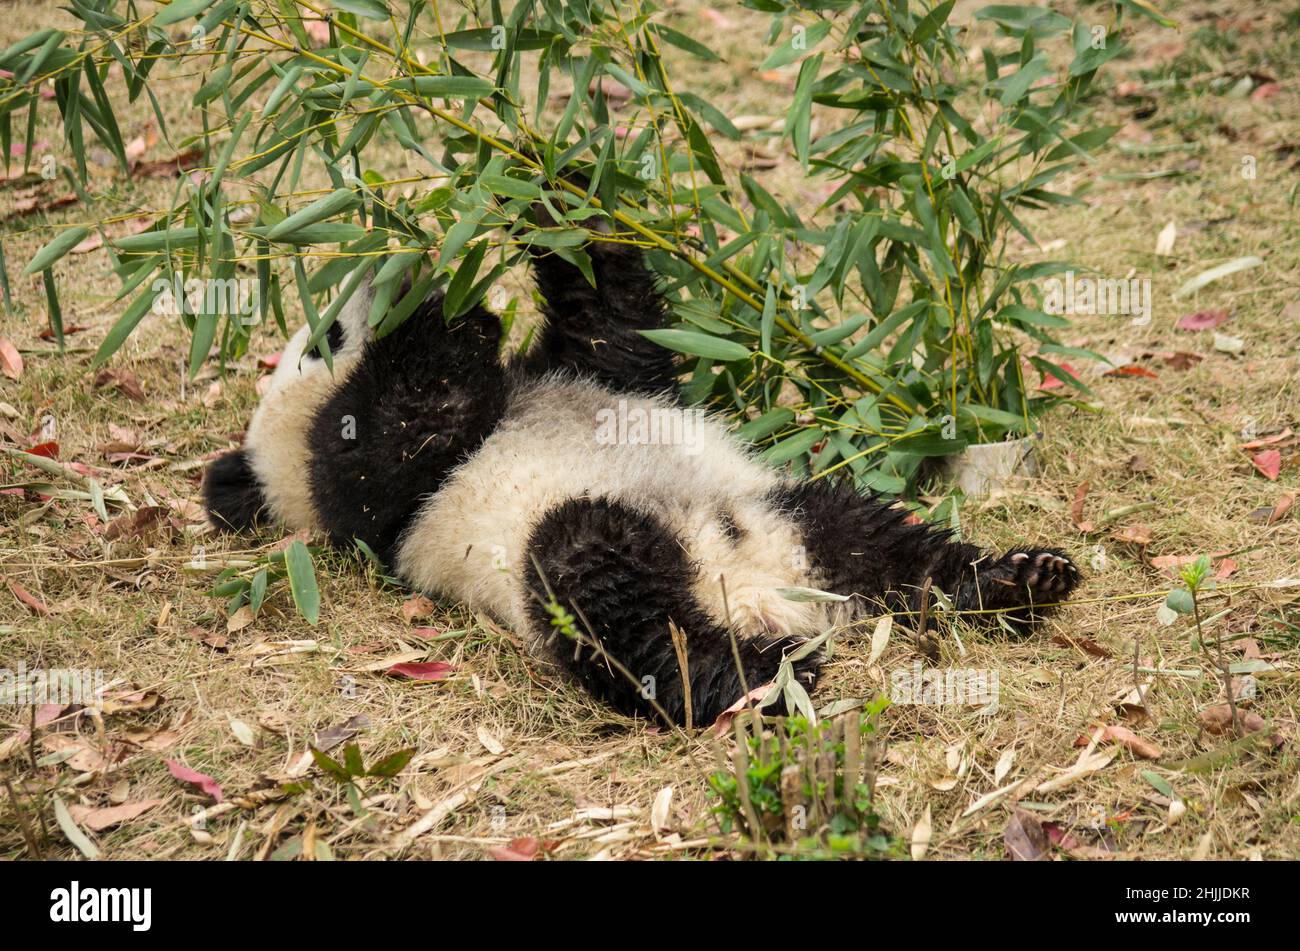 China, Sichuan, Chengdu panda base Stock Photo